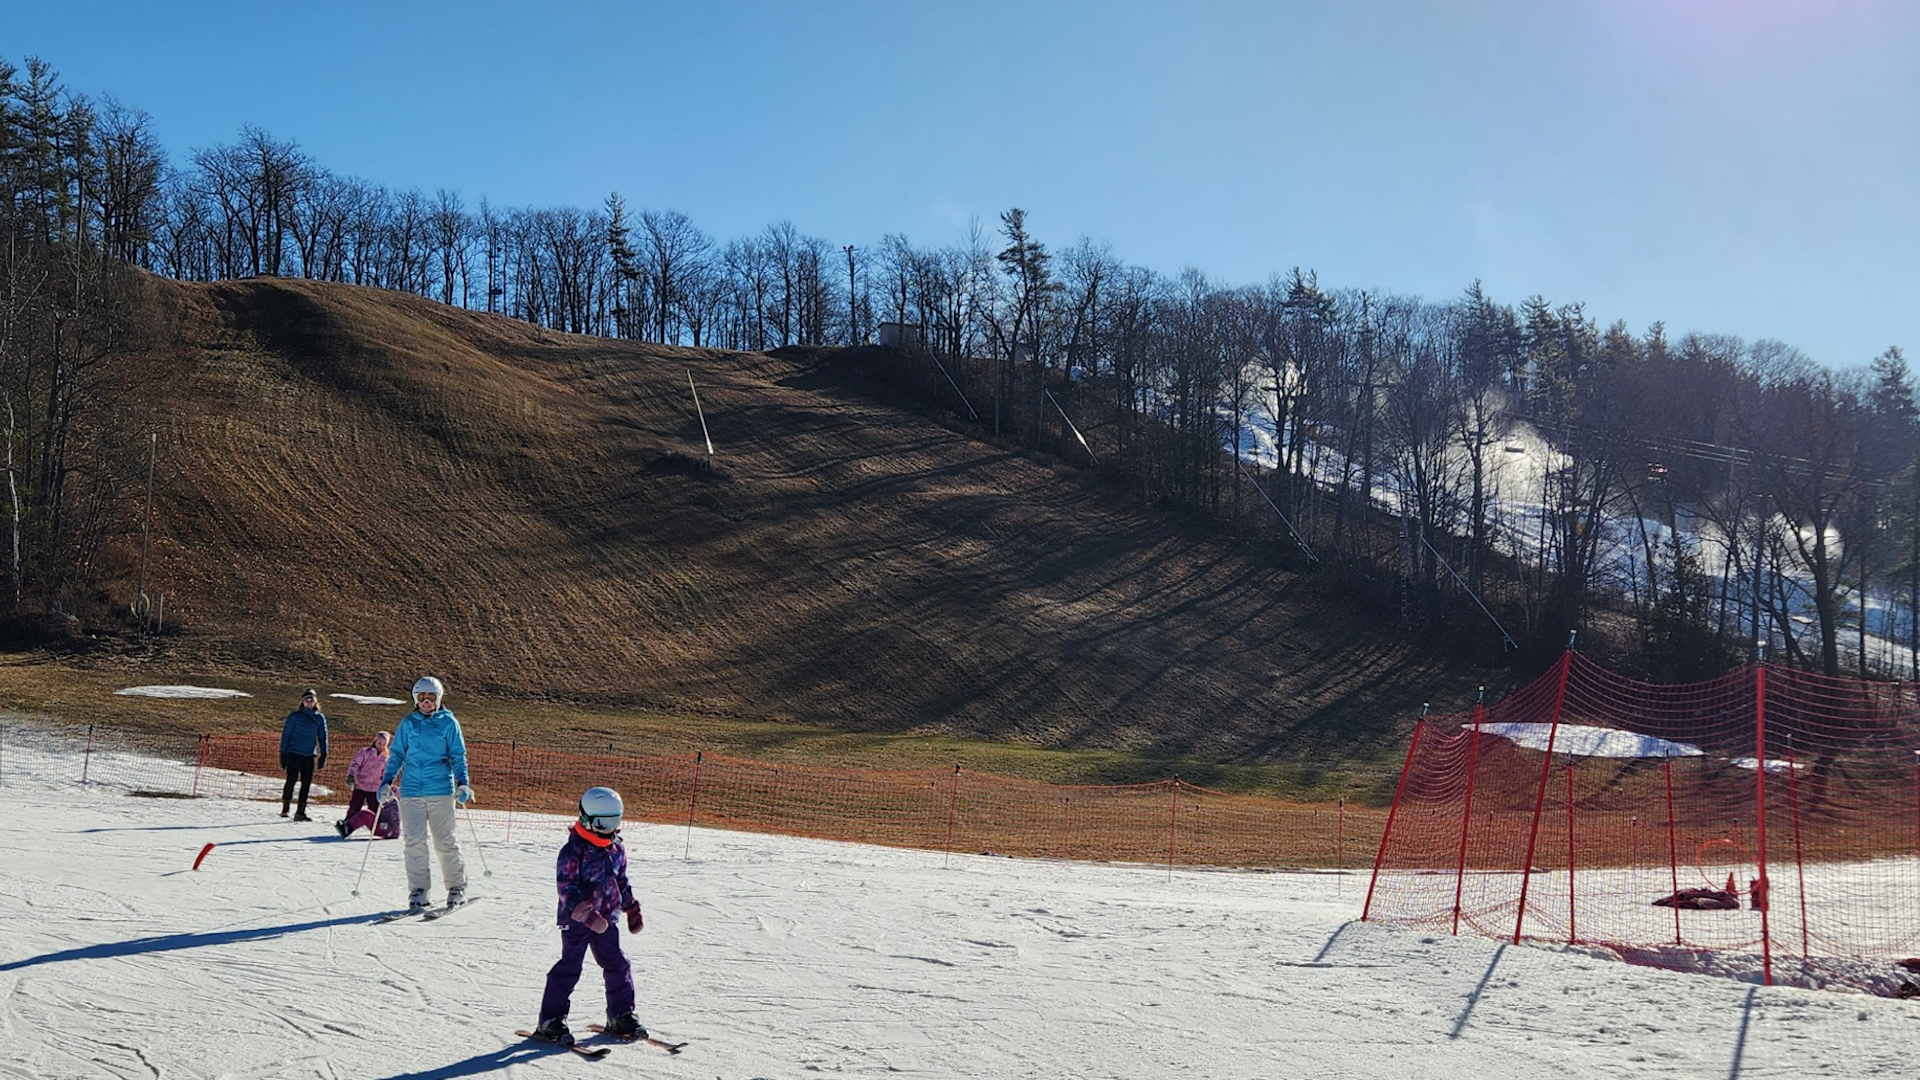 Ontario ski hill struggling with mild winter